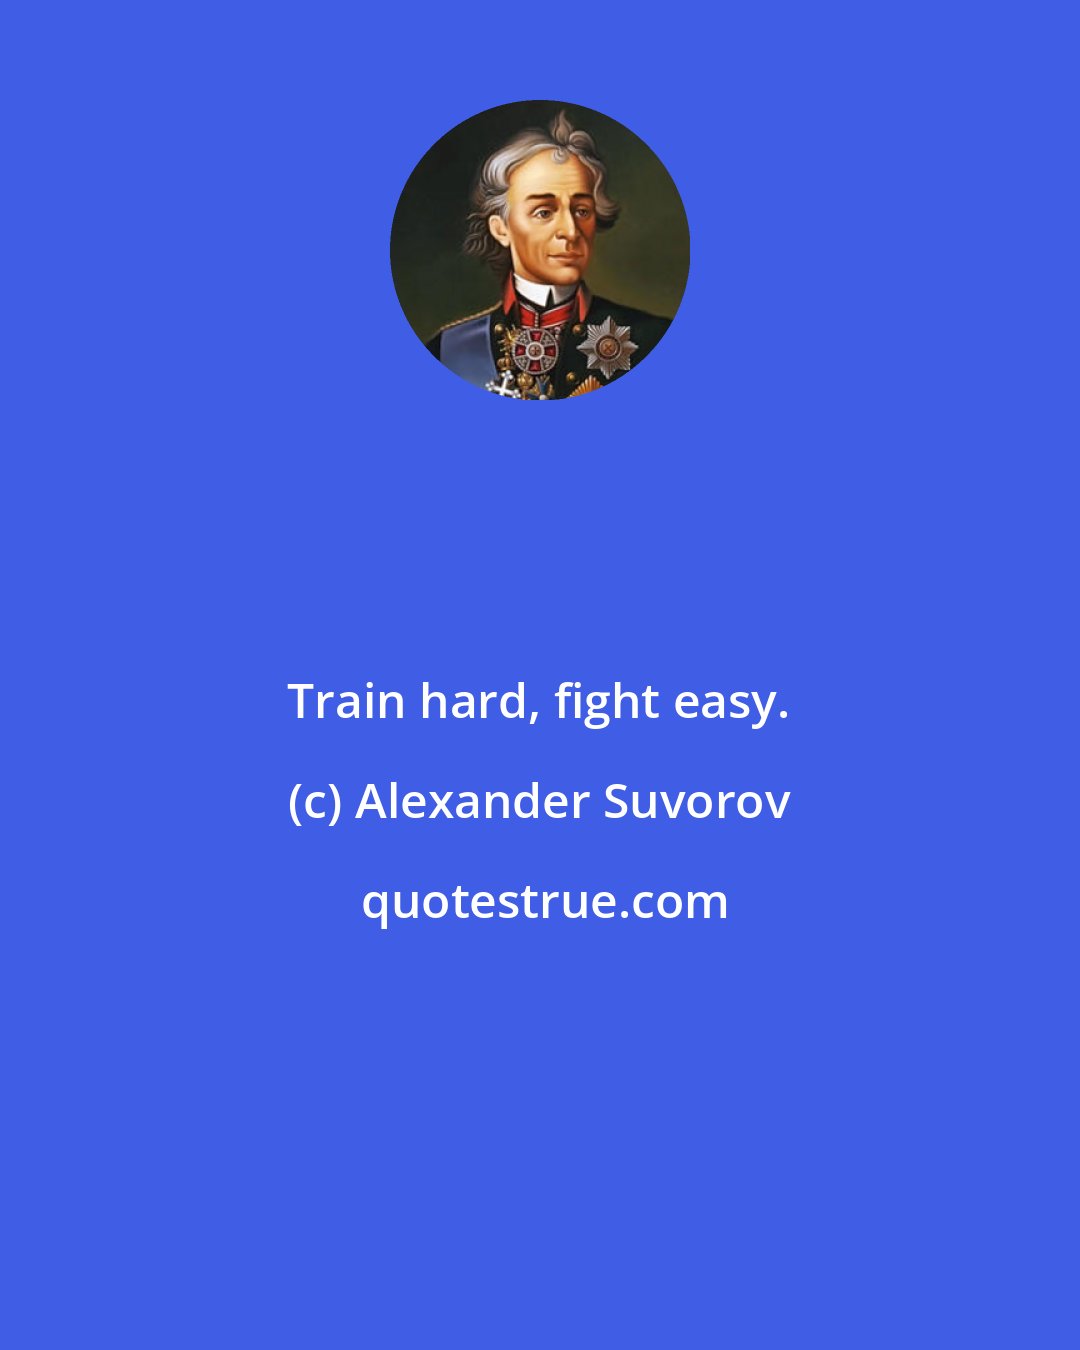 Alexander Suvorov: Train hard, fight easy.